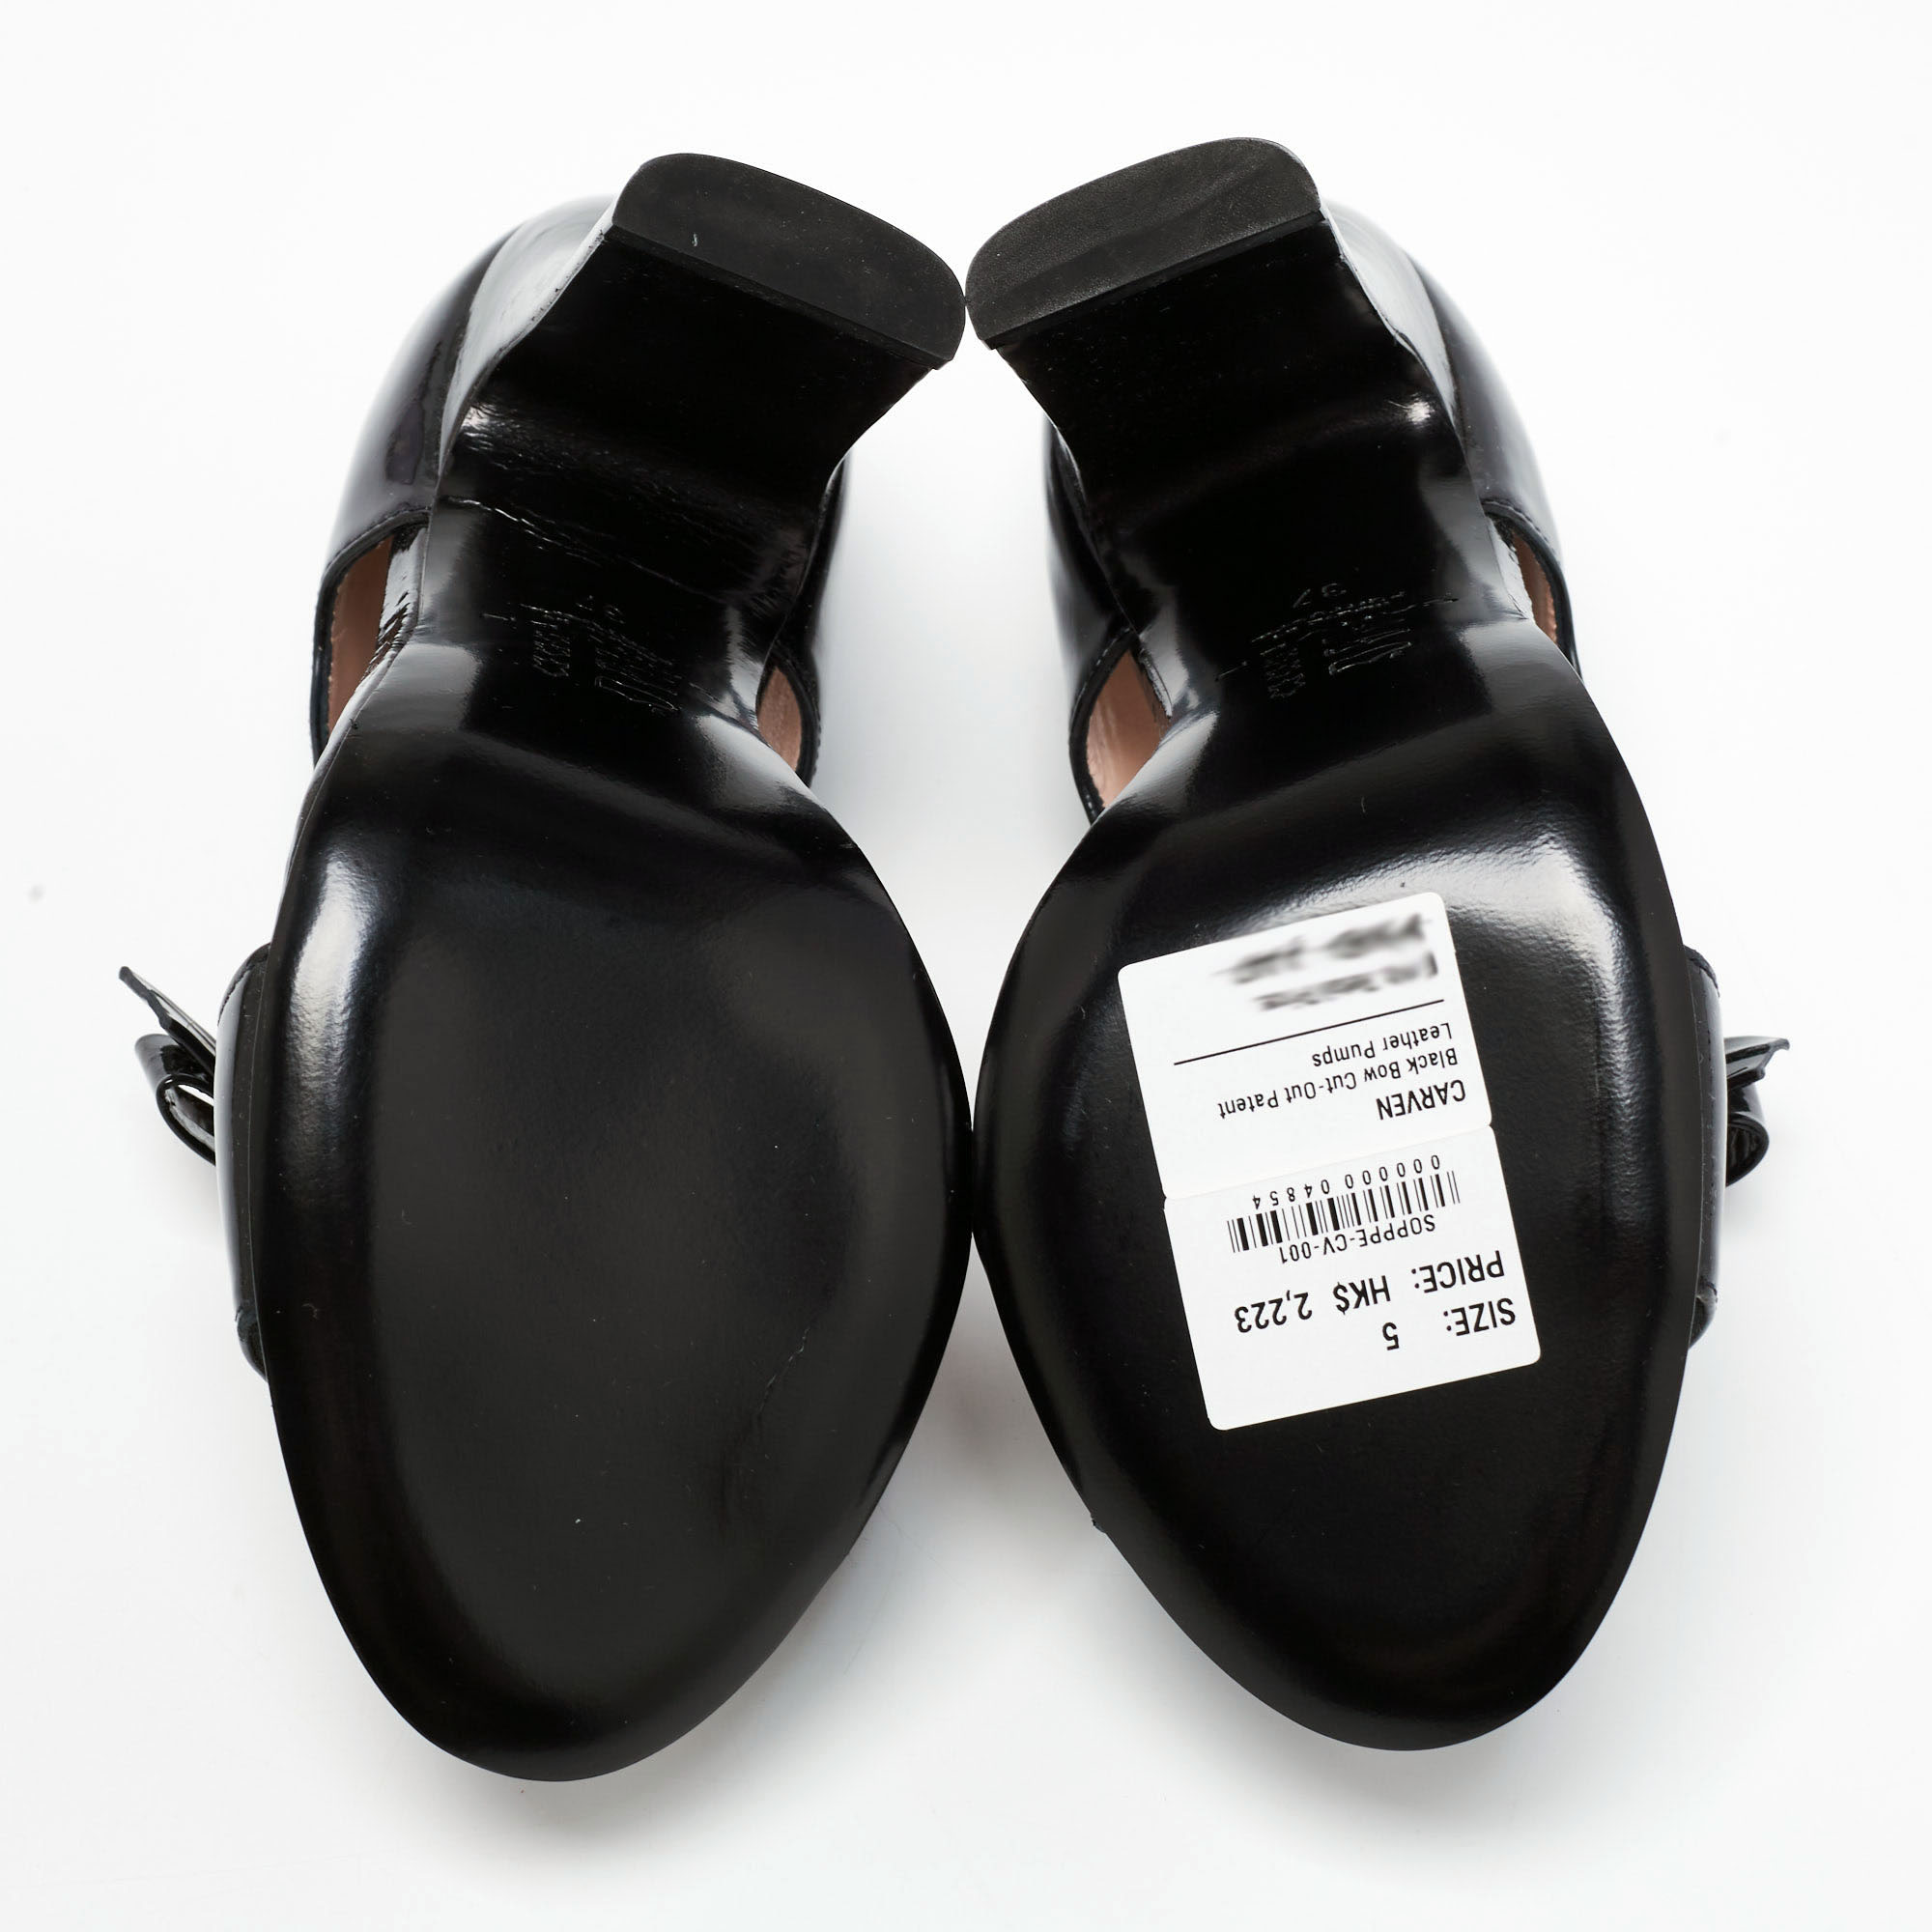 Carven Black Patent Leather Bow Cut-Out Sandals Size 37